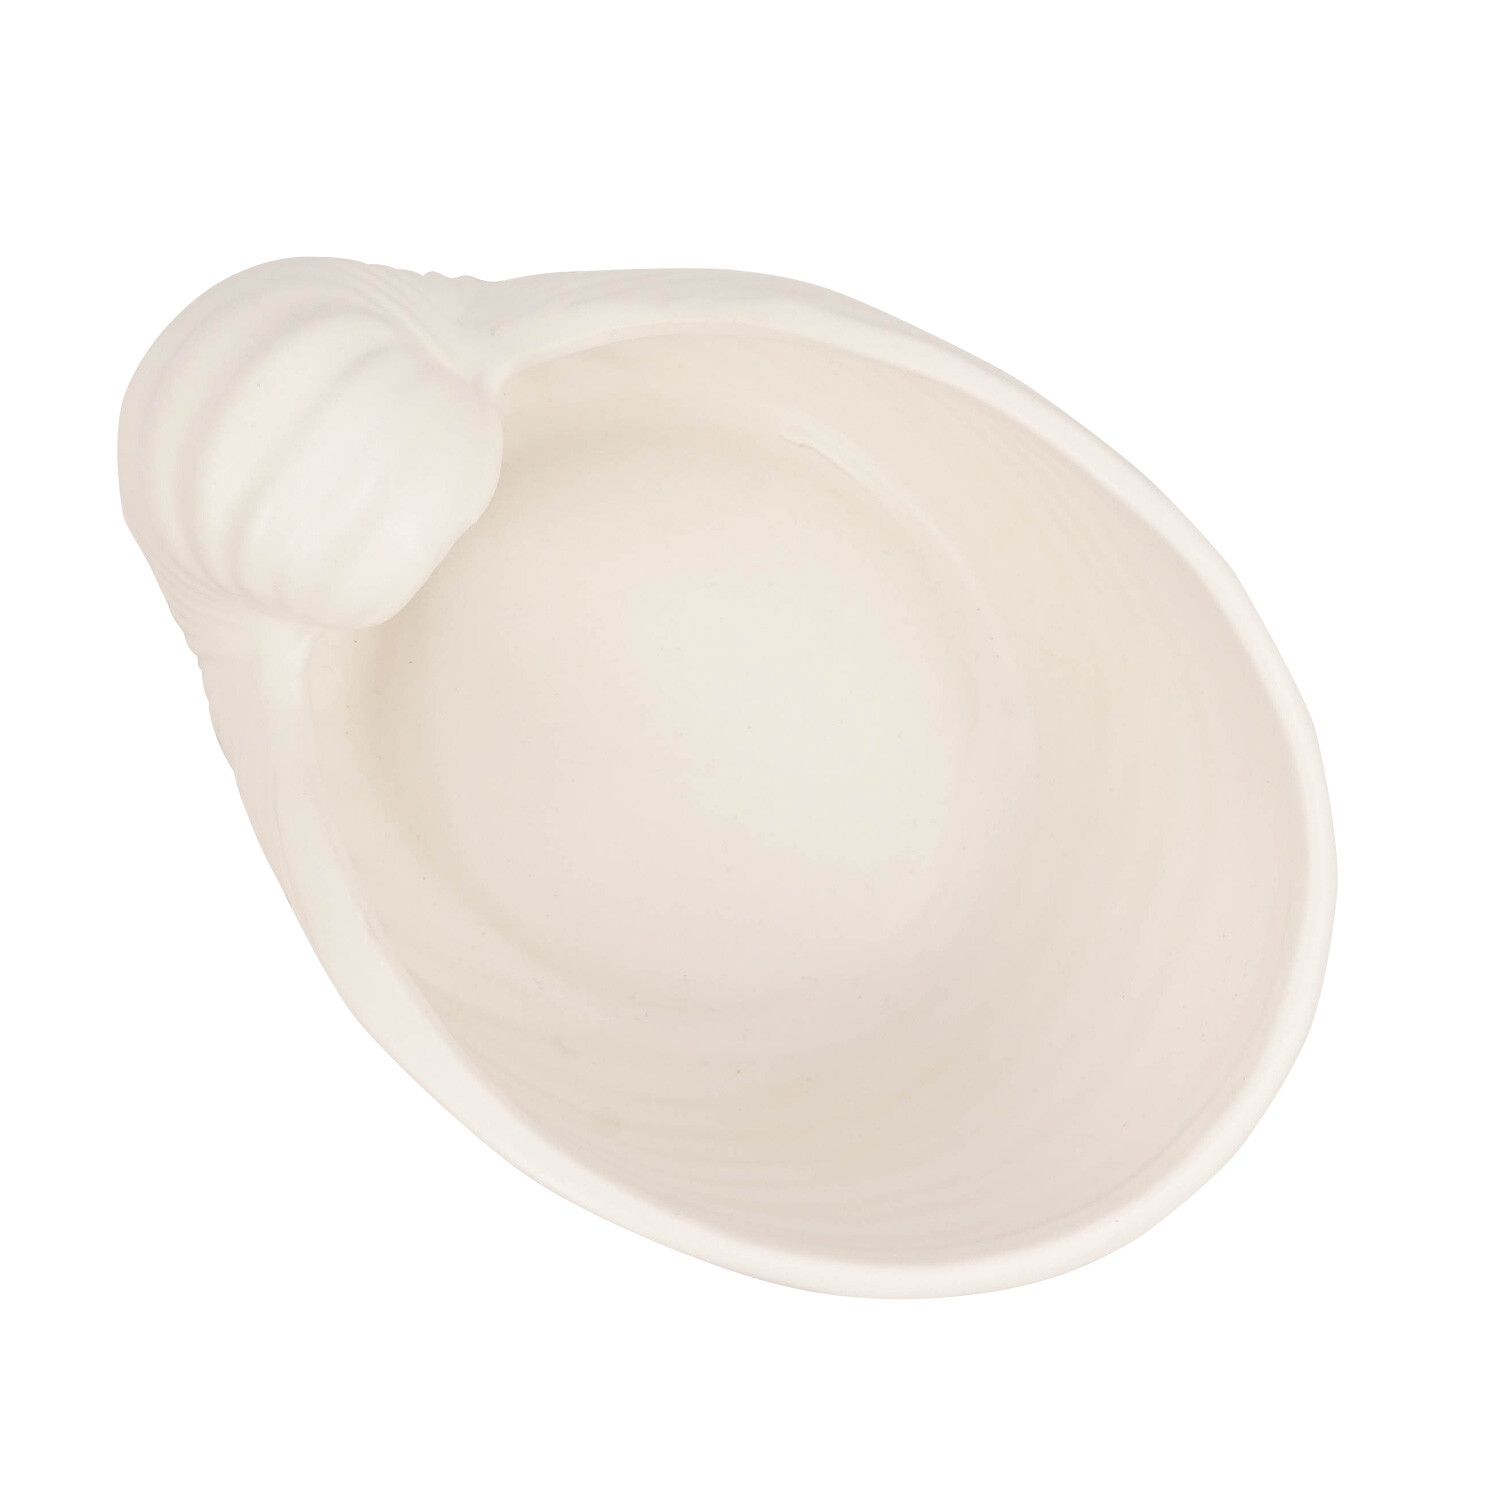 Nori Shell Bowl - White Image 2